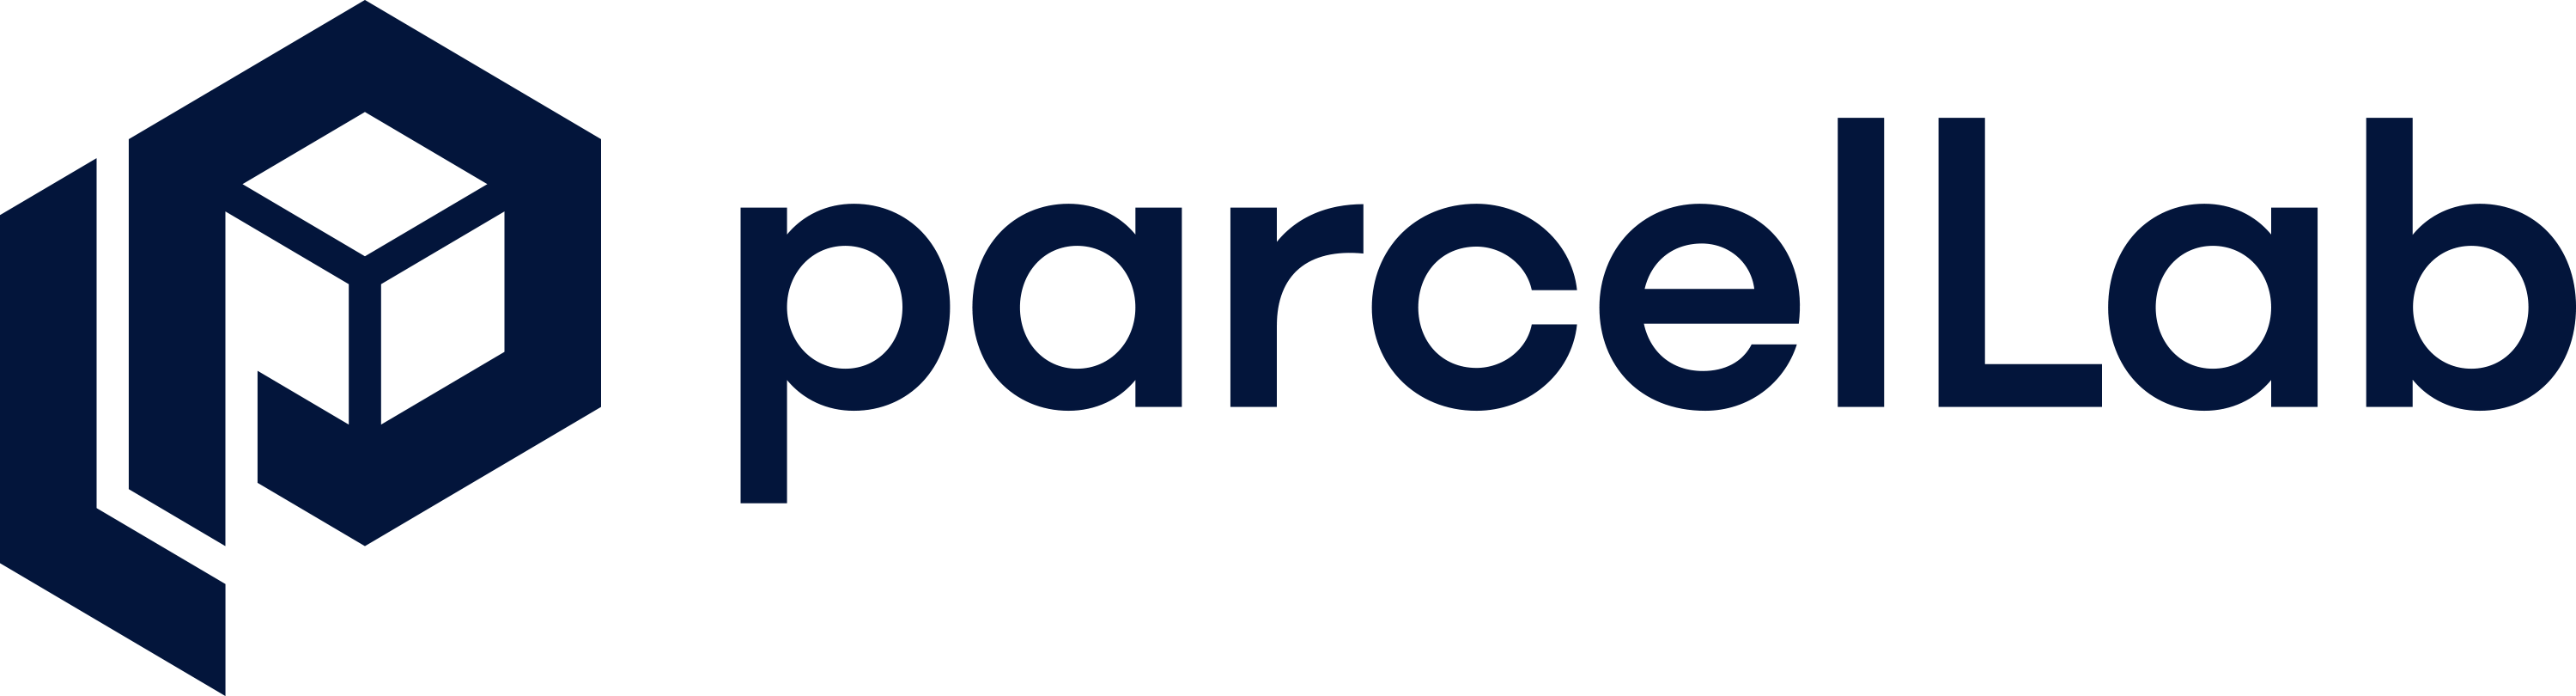 parcellab-logo-1-1